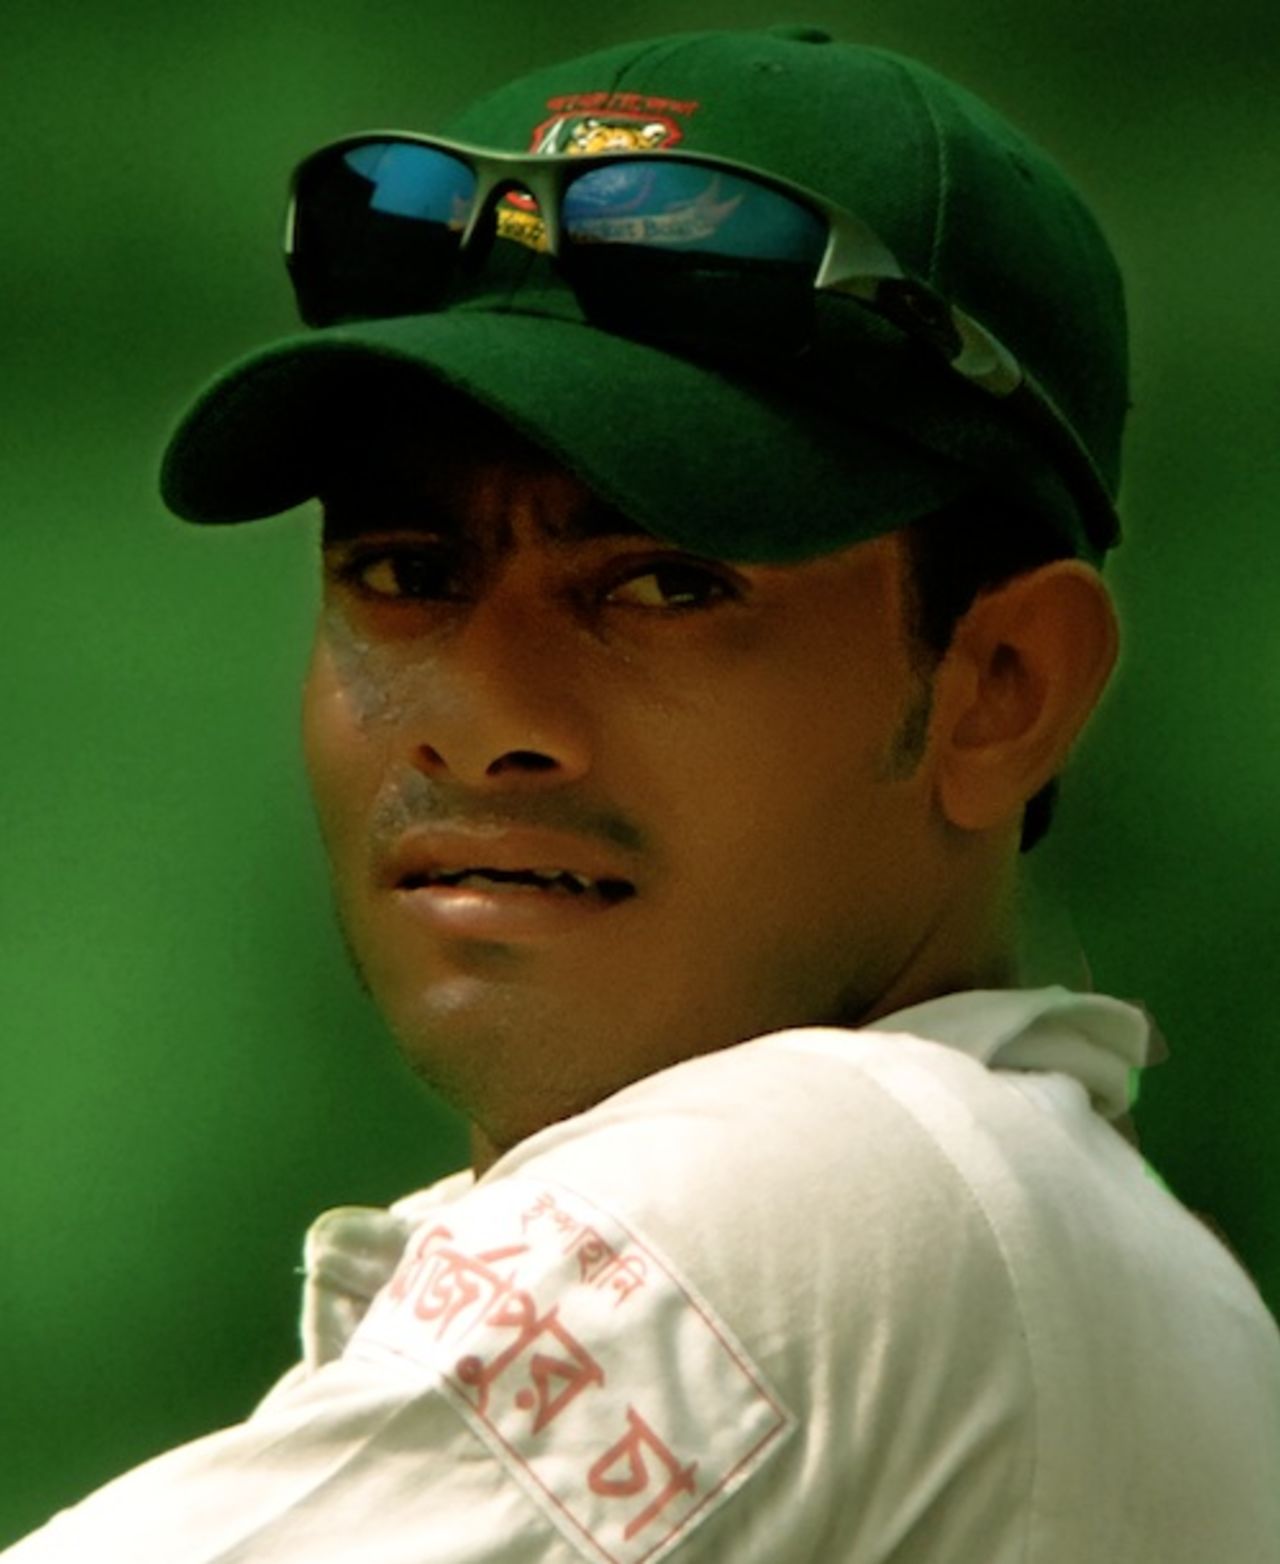 Mohammad Sharif, player portrait